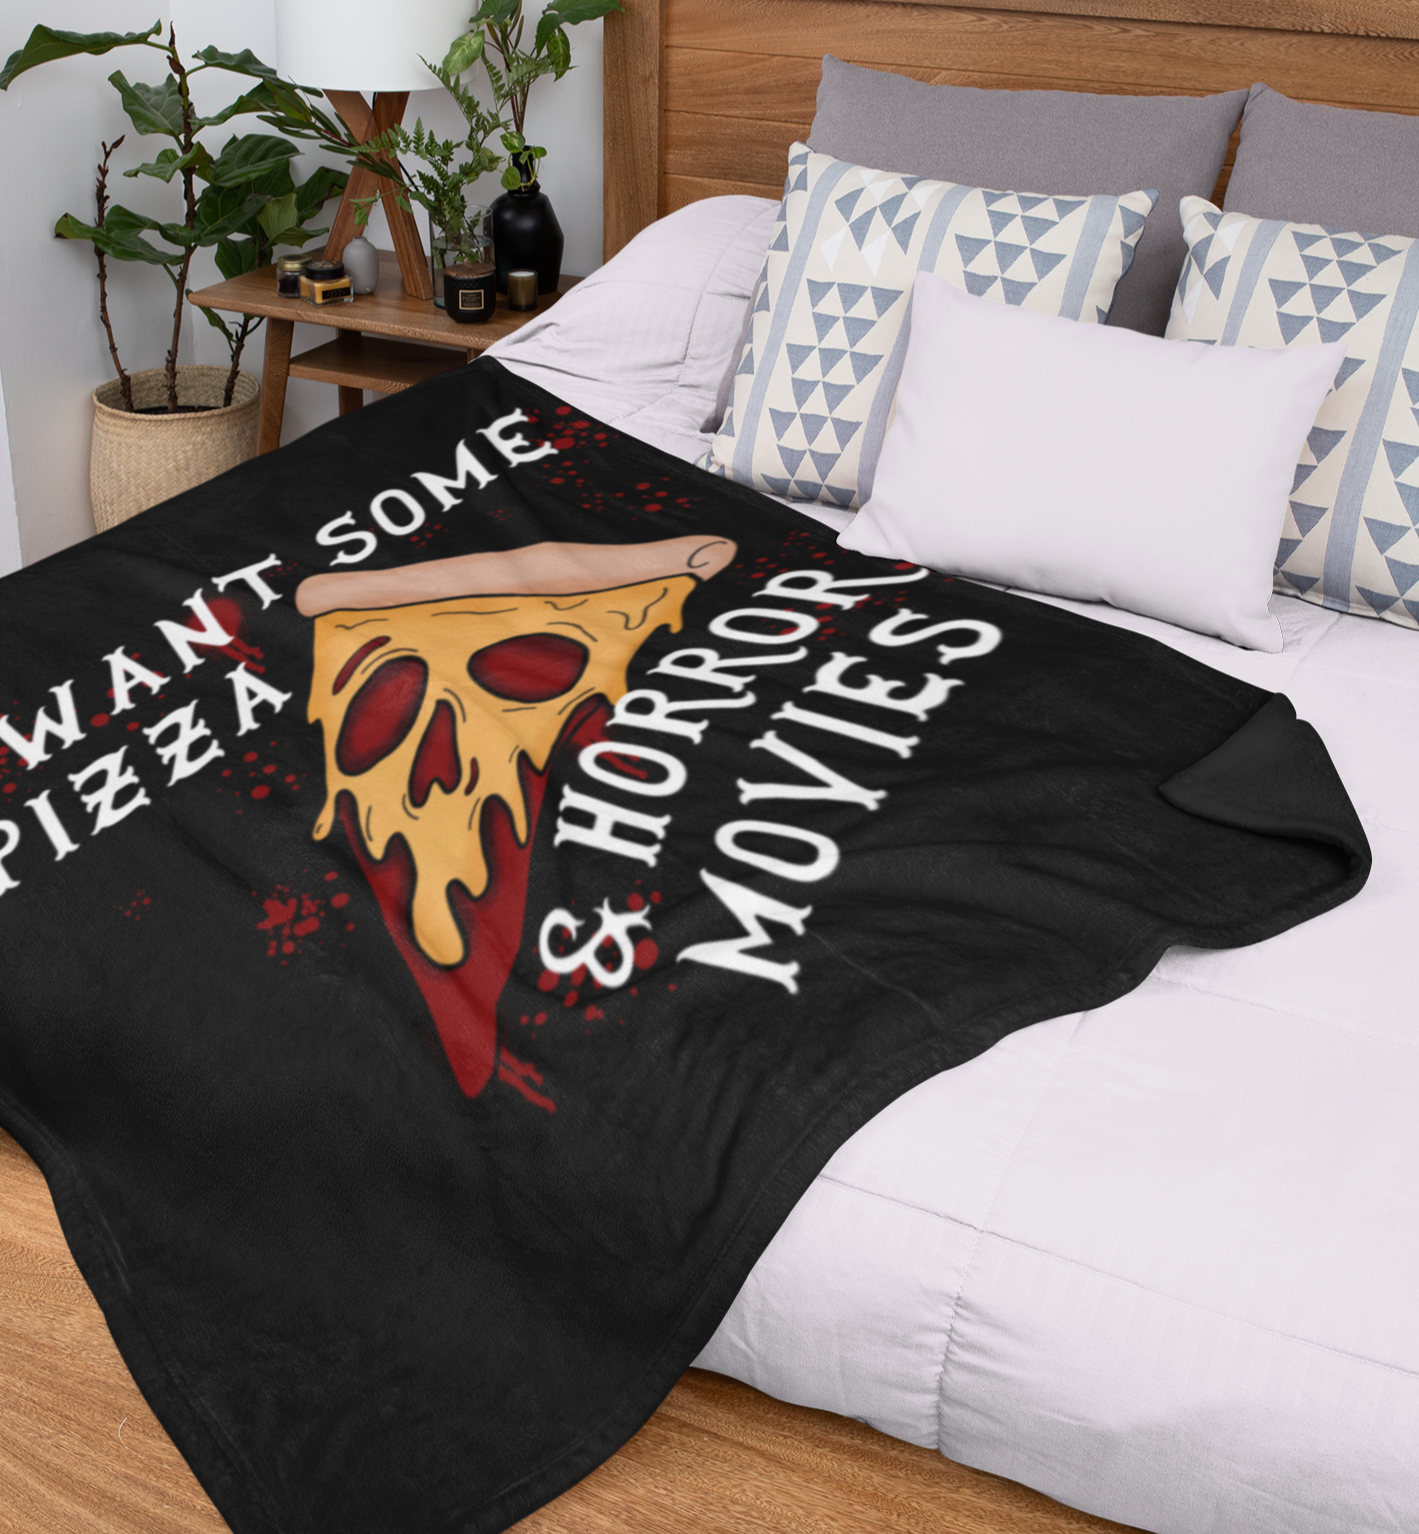 Blanket Pizza